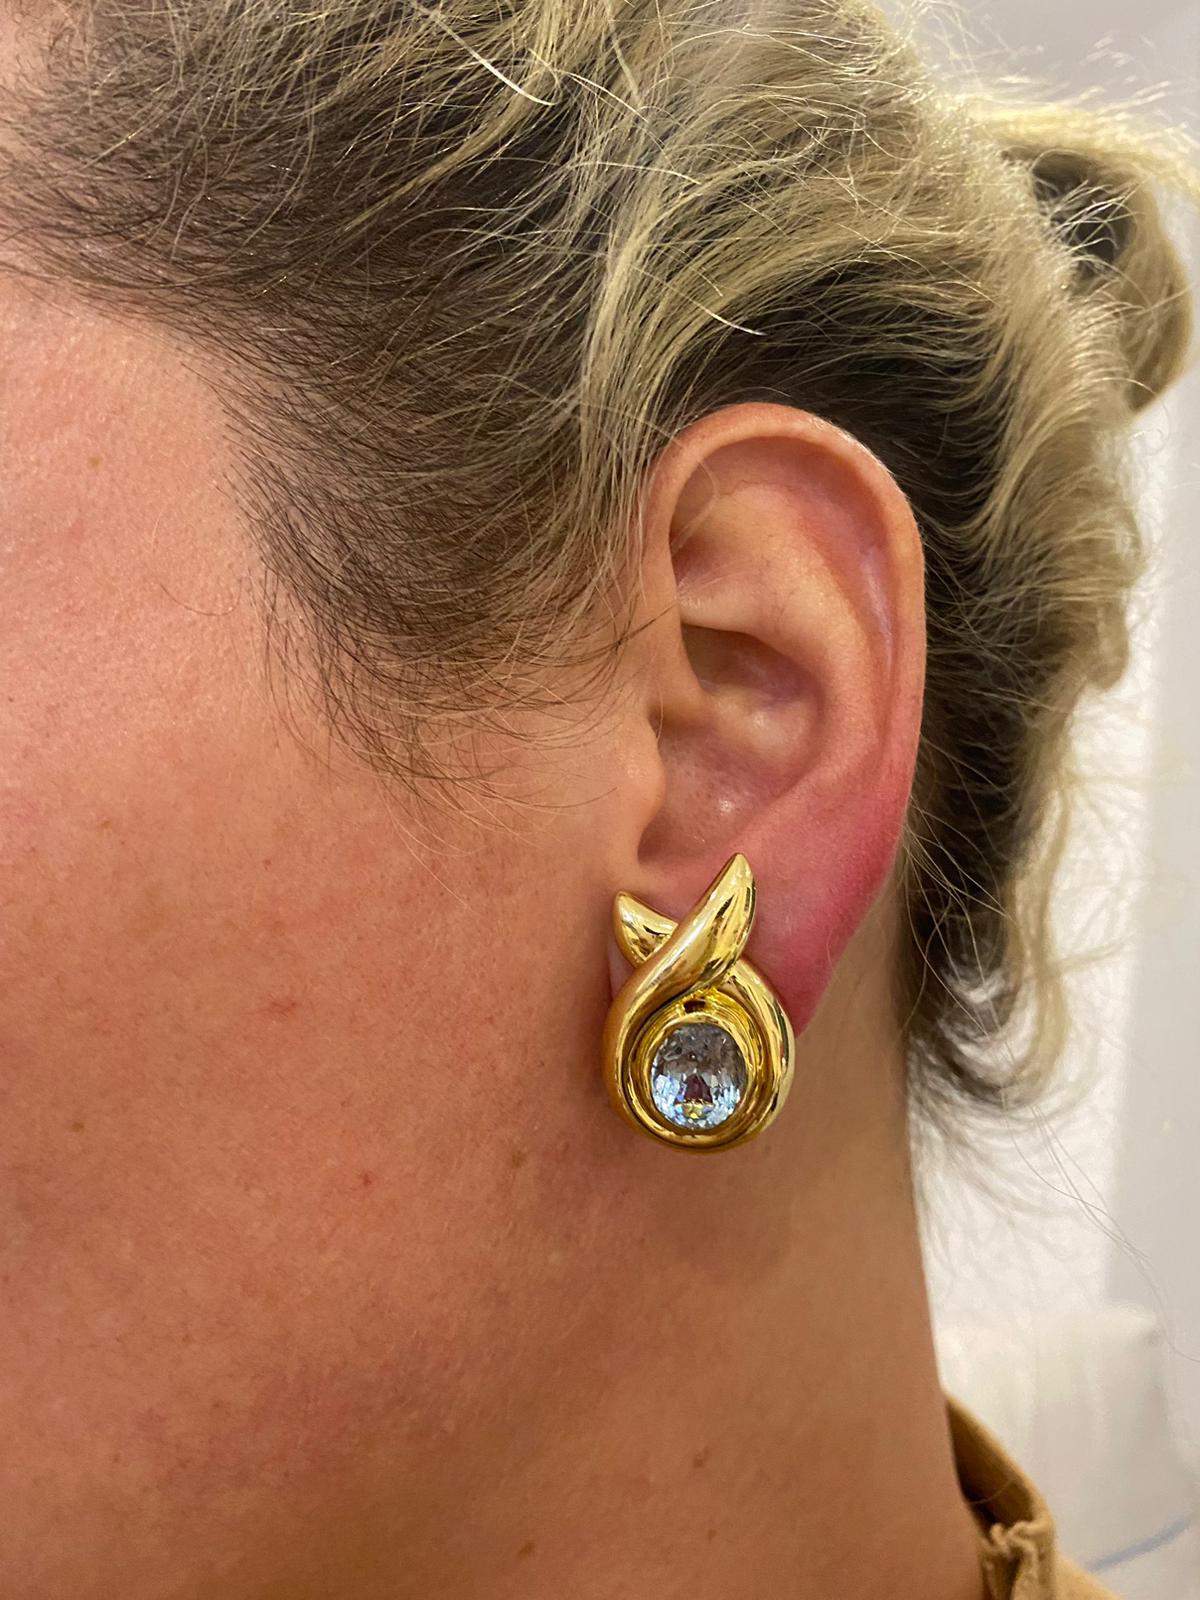 Women's Verdura Milano Convertible Earrings in 18k Yellow Gold with 9.20 Ctw Aquamarines